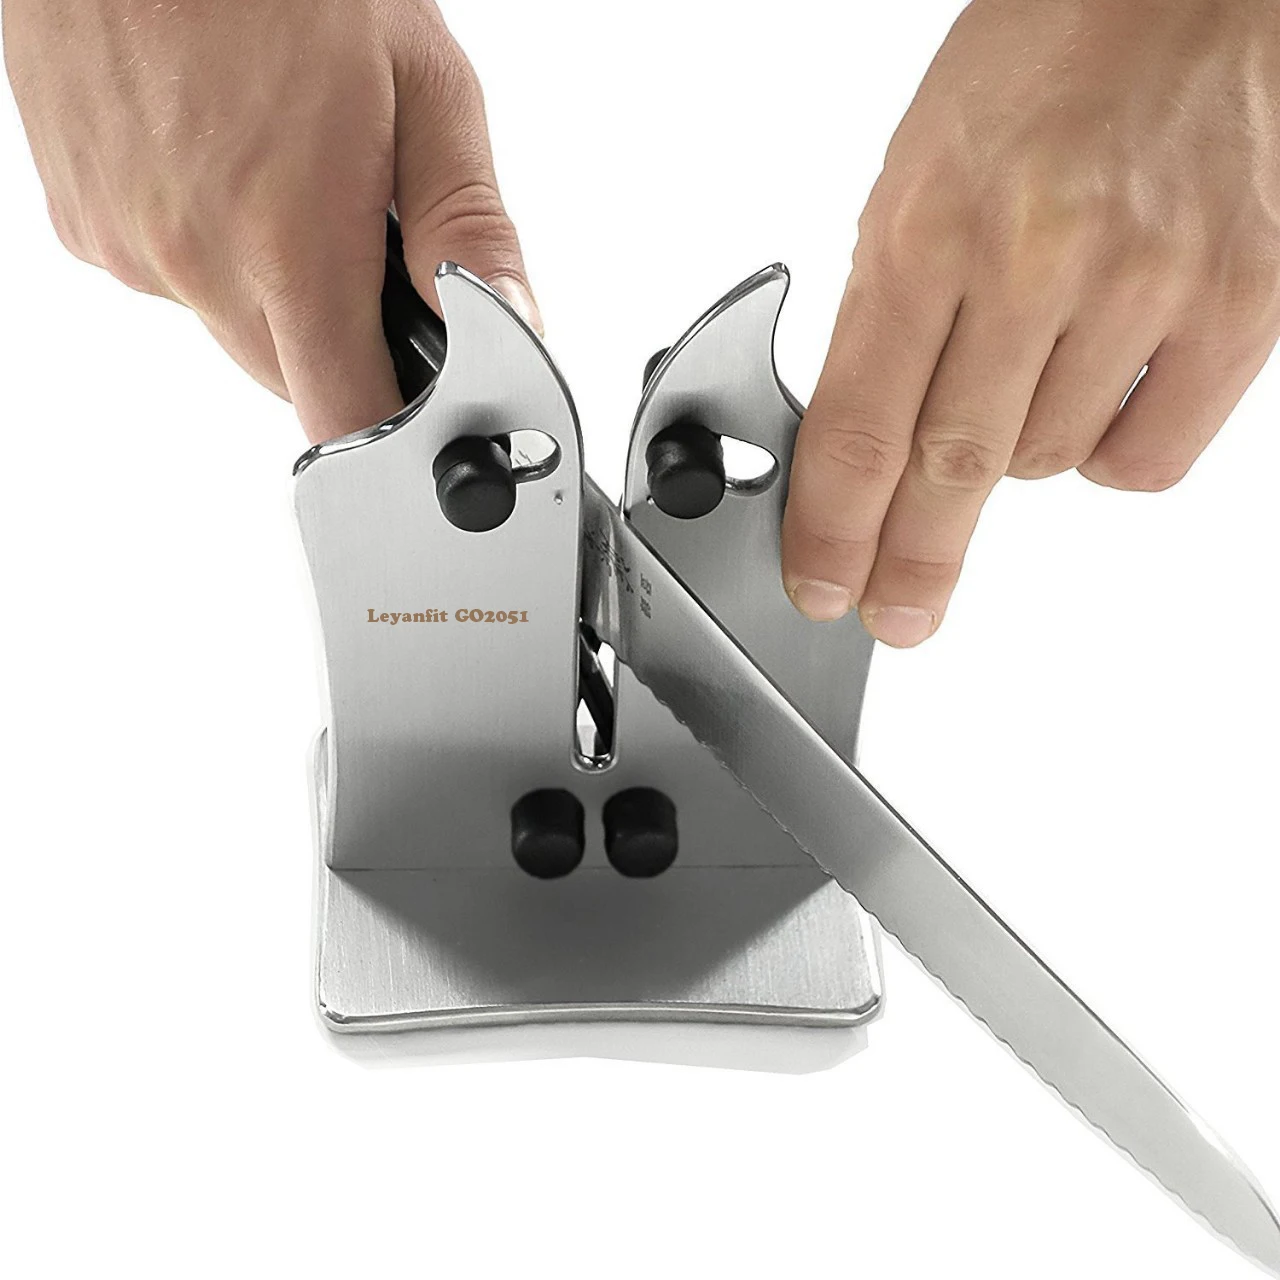 https://ae01.alicdn.com/kf/Sedc2a388c9b740af9bed618933c4241ch/Bavarian-Edge-Knife-Sharpeners-Multi-function-Knife-Sharpener-Supplies-V-shaped-Knife-Sharpener-Household-Quick-Sharpening.jpg